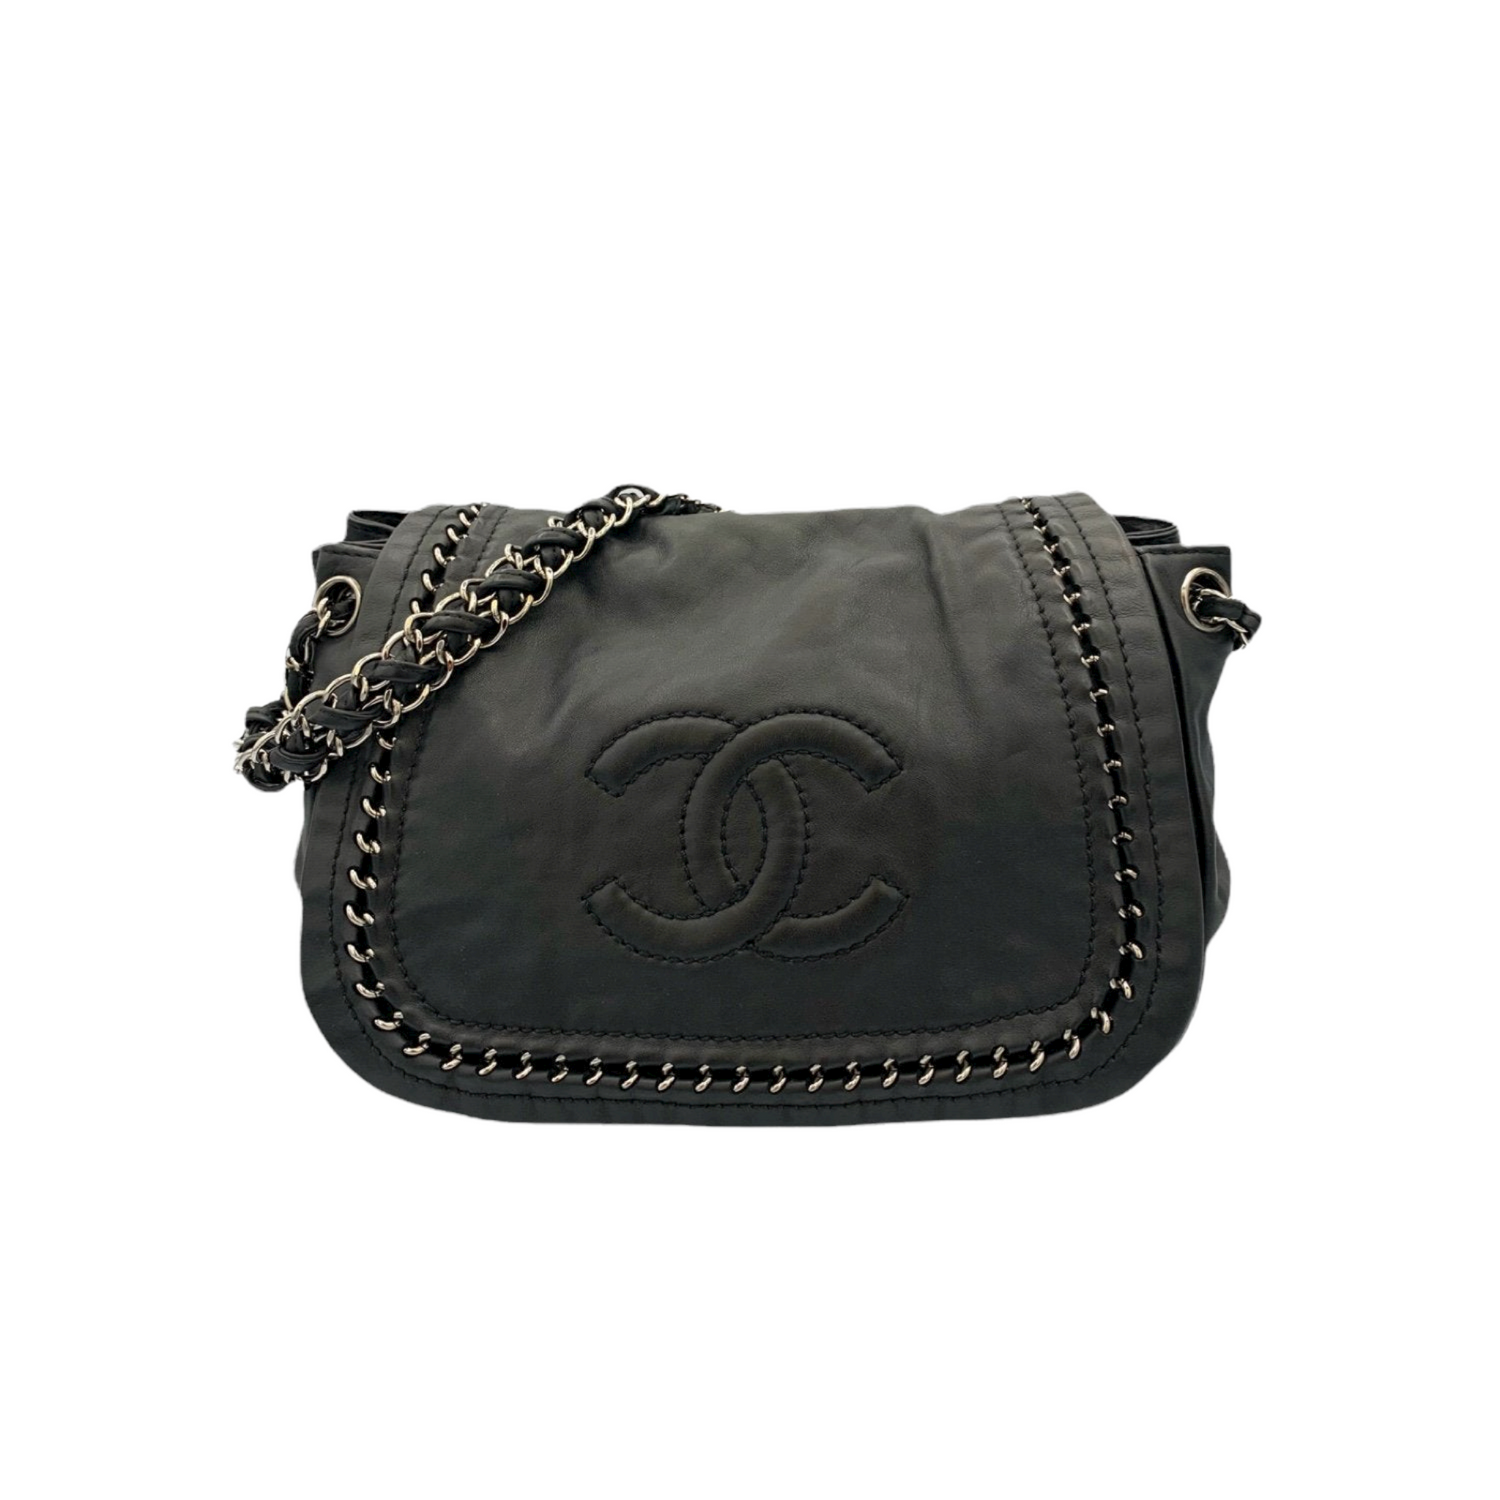 Chanel satchel bag - 2010s